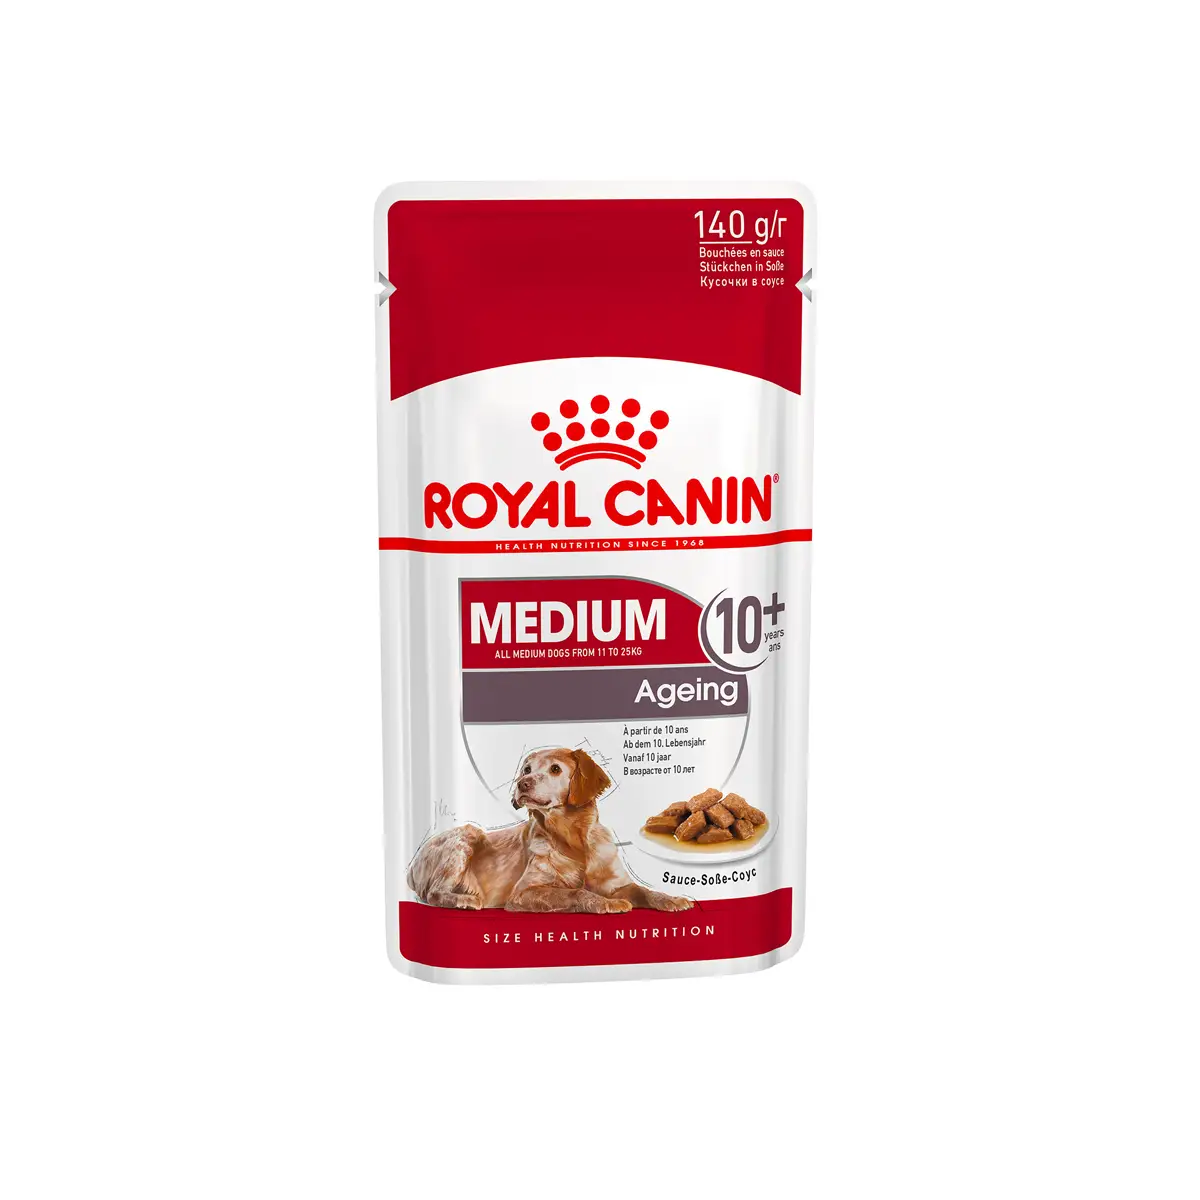 Royal Canin - Ageing 10+ Medium Gravy Wet Food 140g